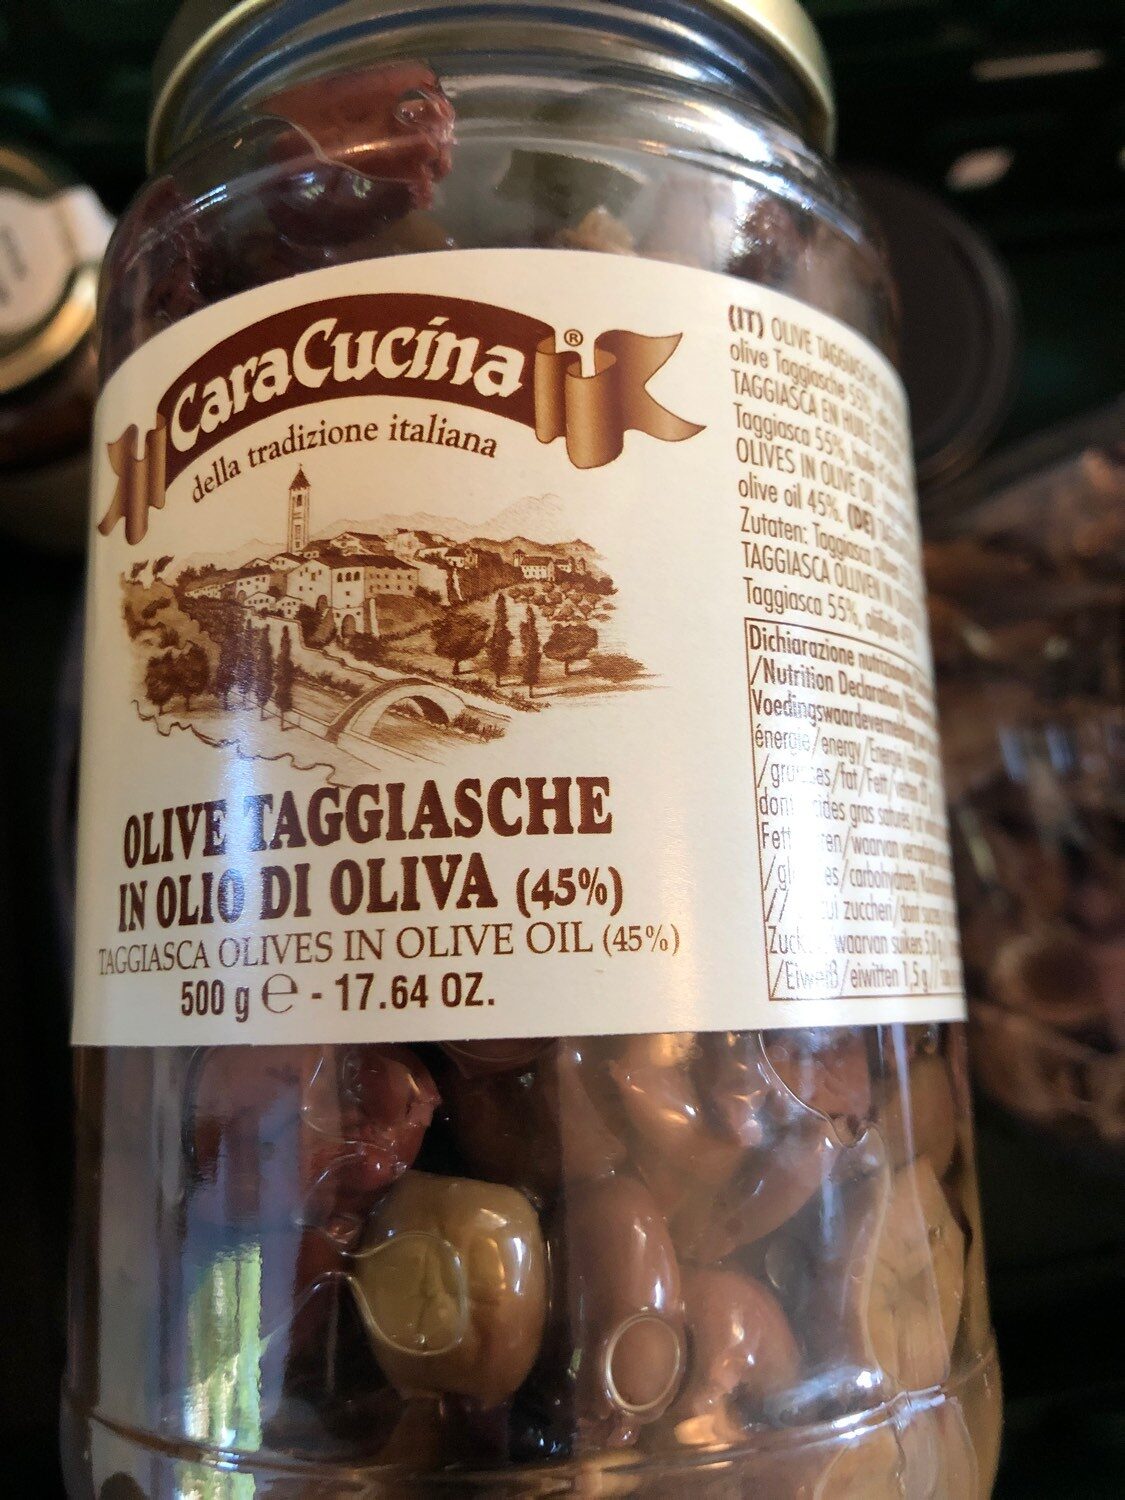 Olive taggiasche - Product - en